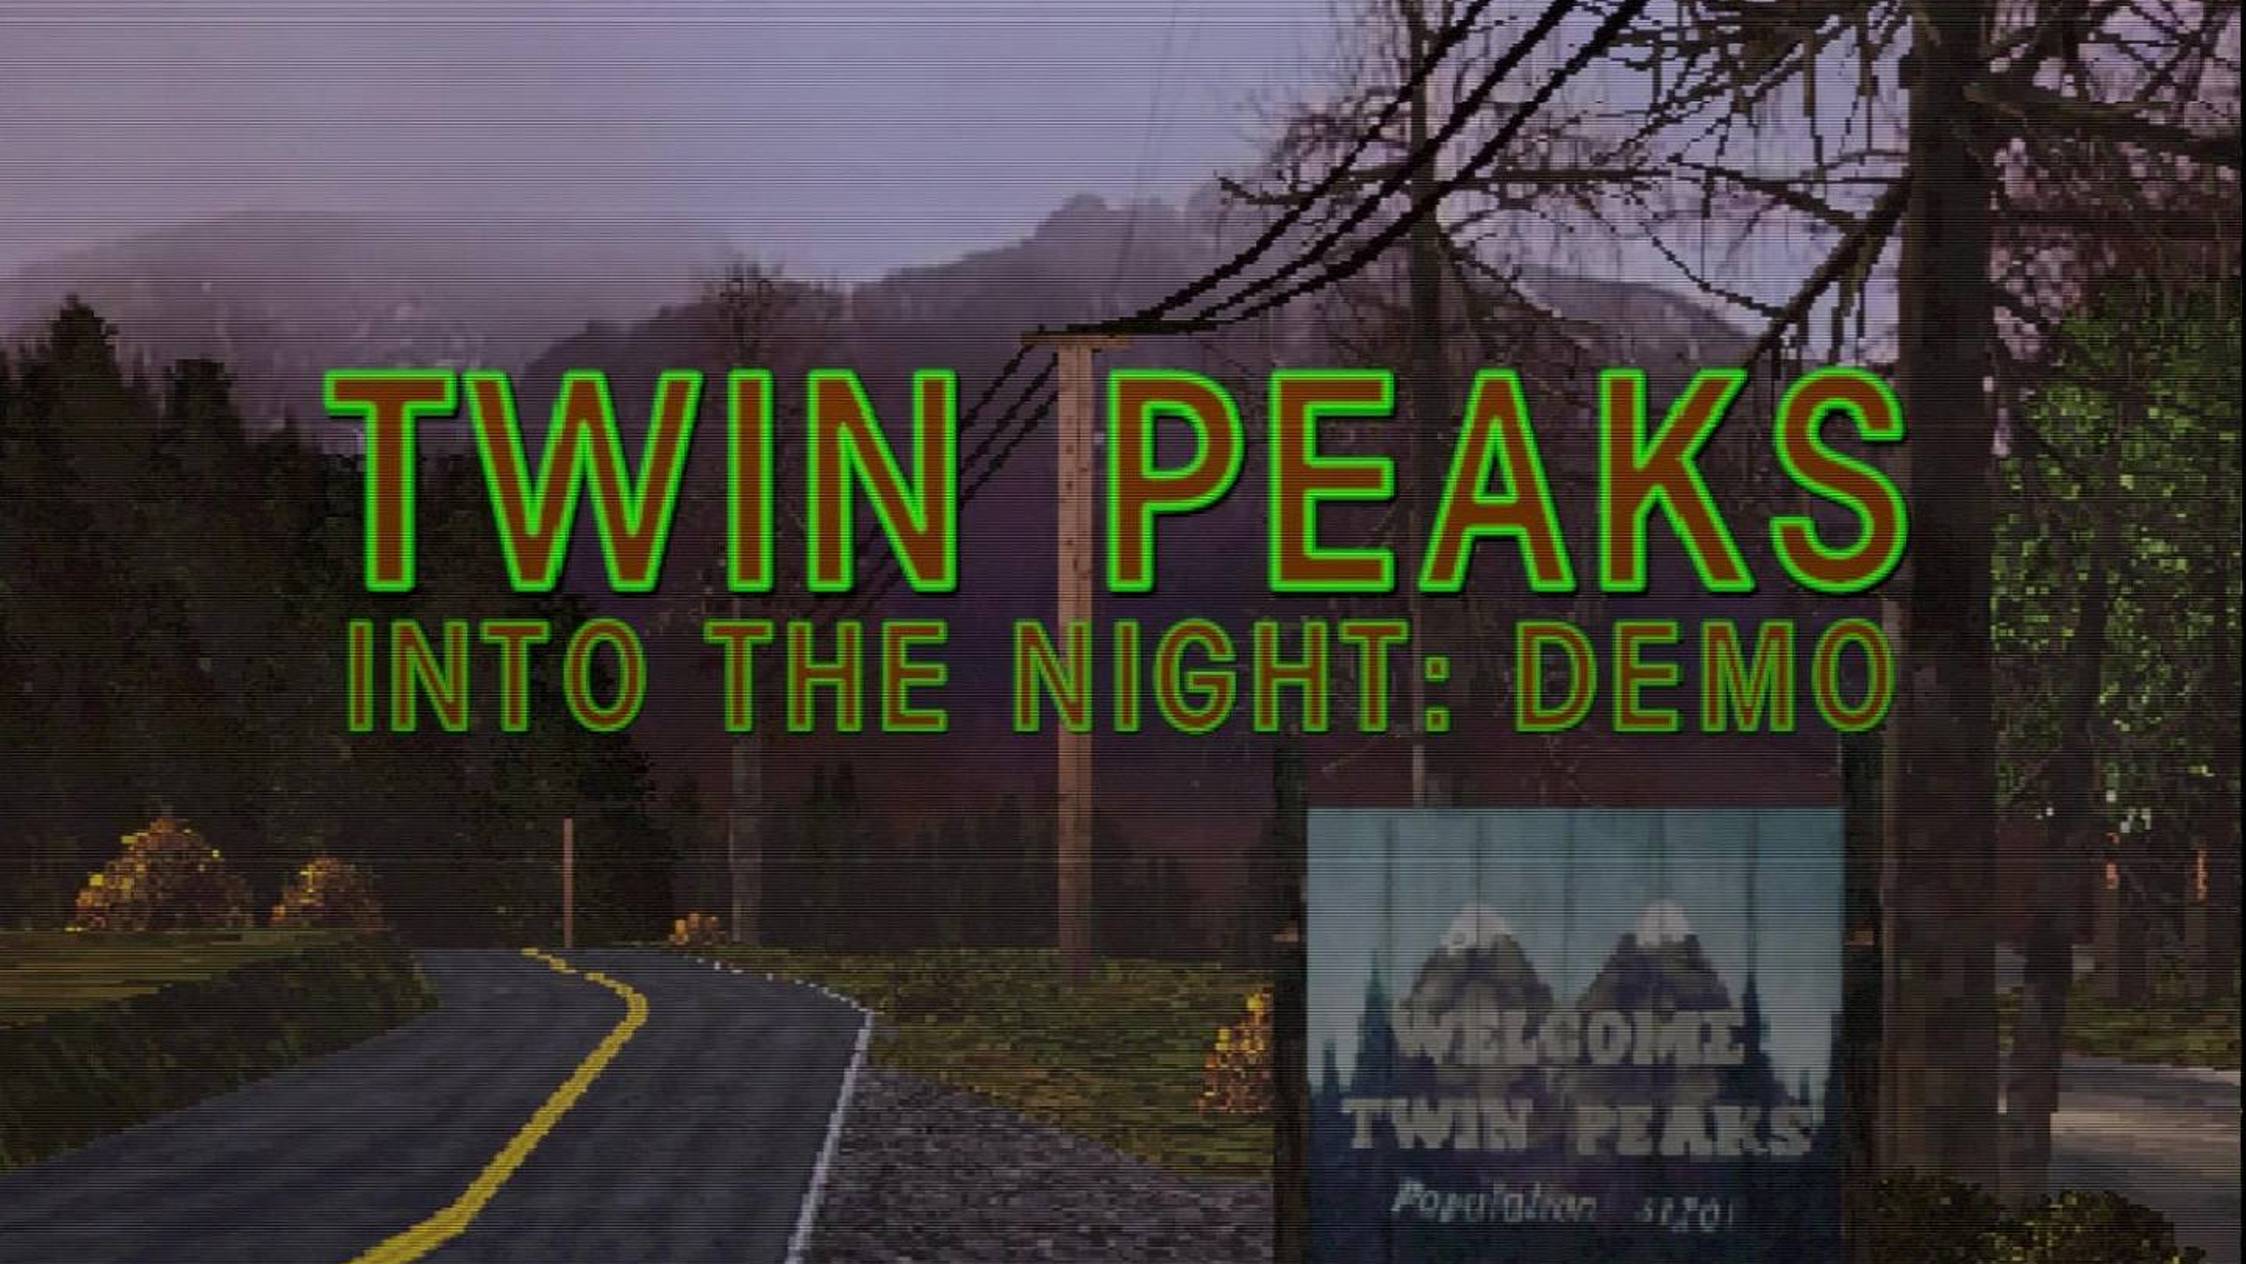 Демо фанатской игры по сериалу "Твин Пикс" Twin Peaks into the Night.